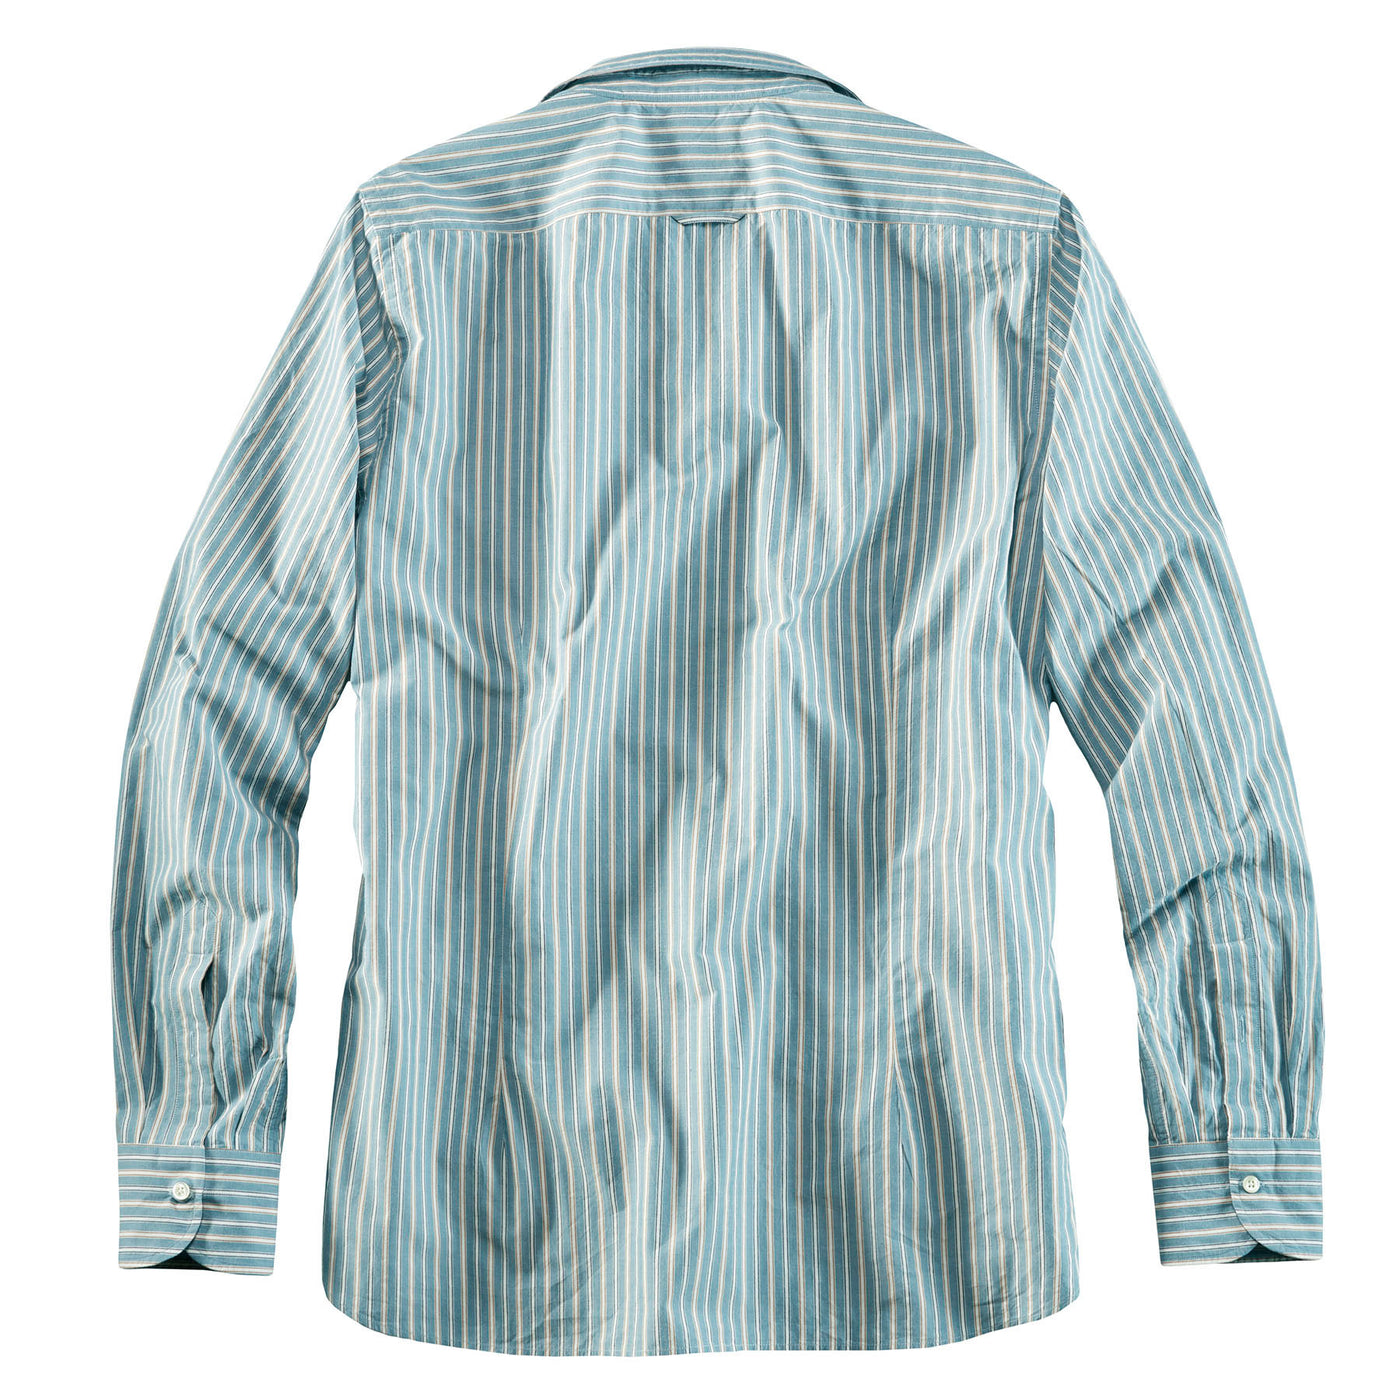 ABCL Japan Shirt Liberty Blue Stripes